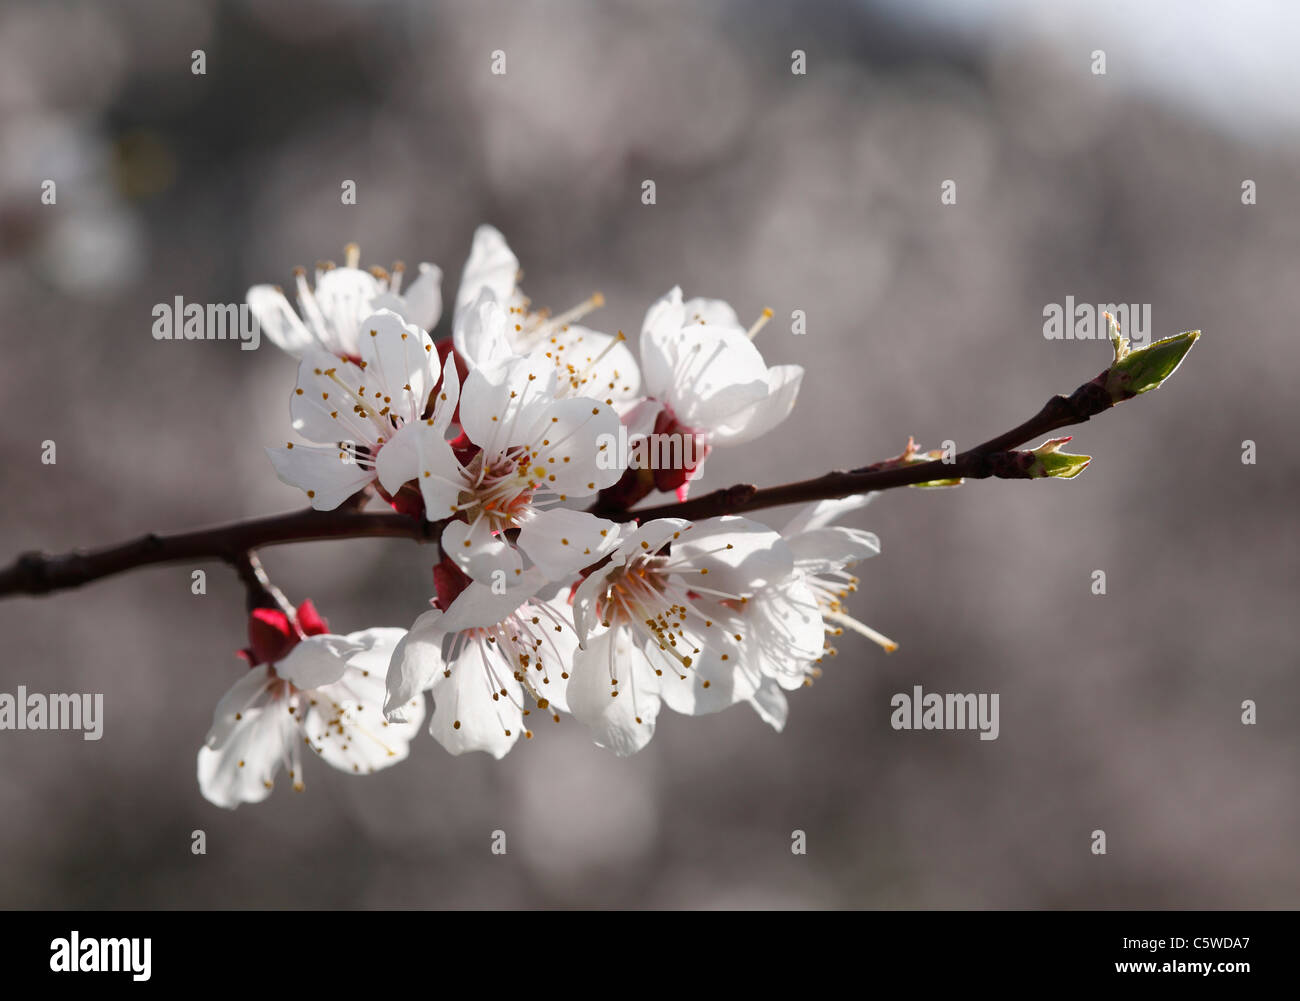 Austria, Lower Austria, Wachau, Twig of apricot blossoms, close up Stock Photo